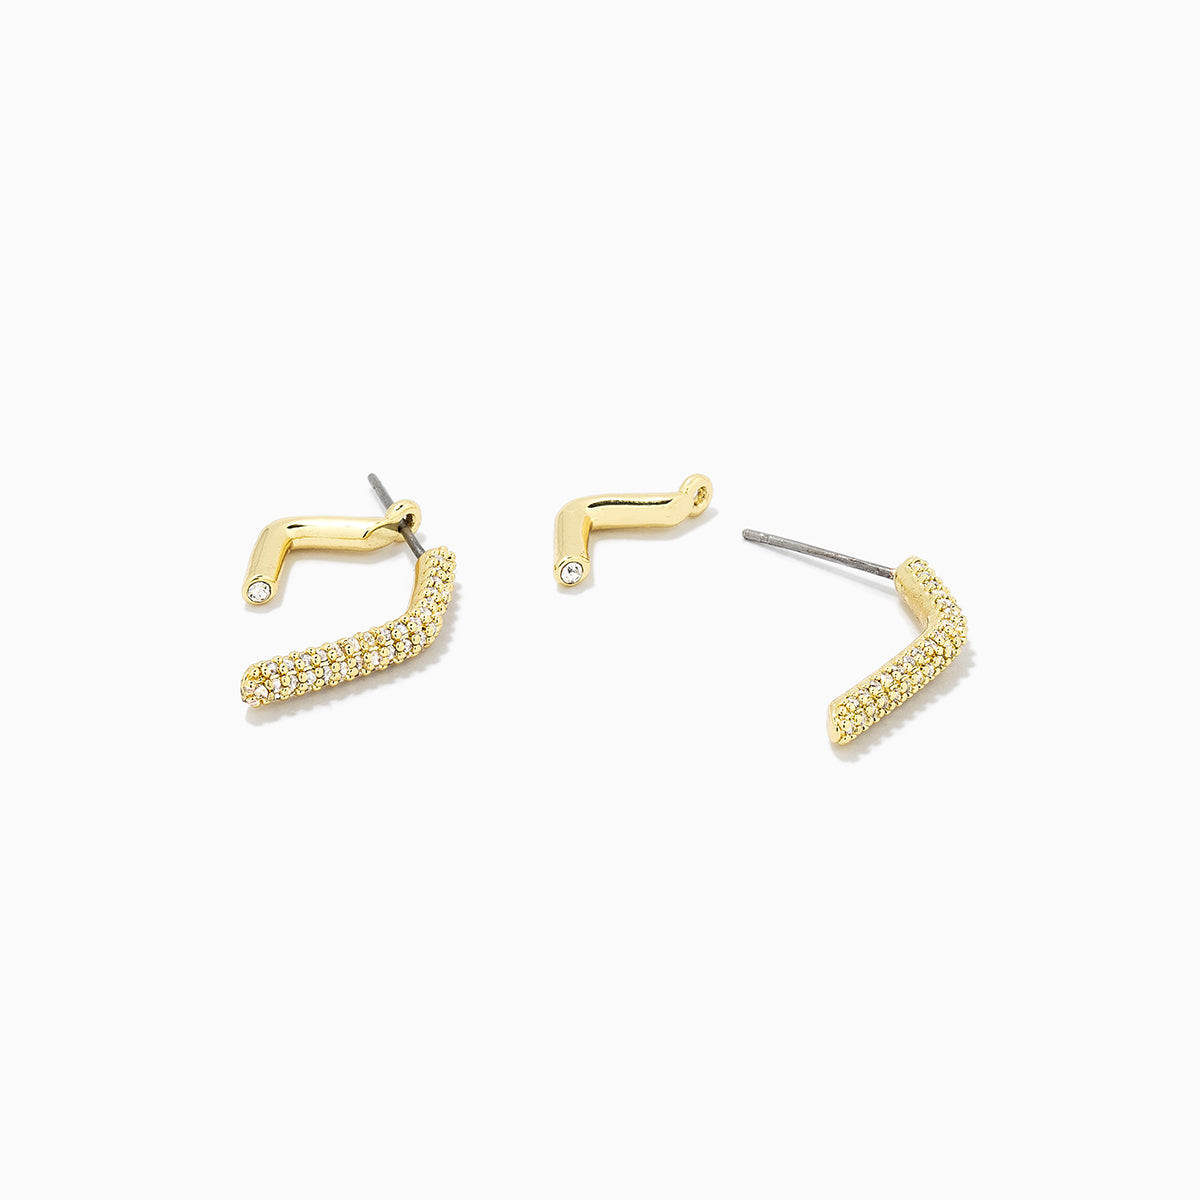 Ego Ear Jacket | Gold | Product Detail Image | Uncommon James